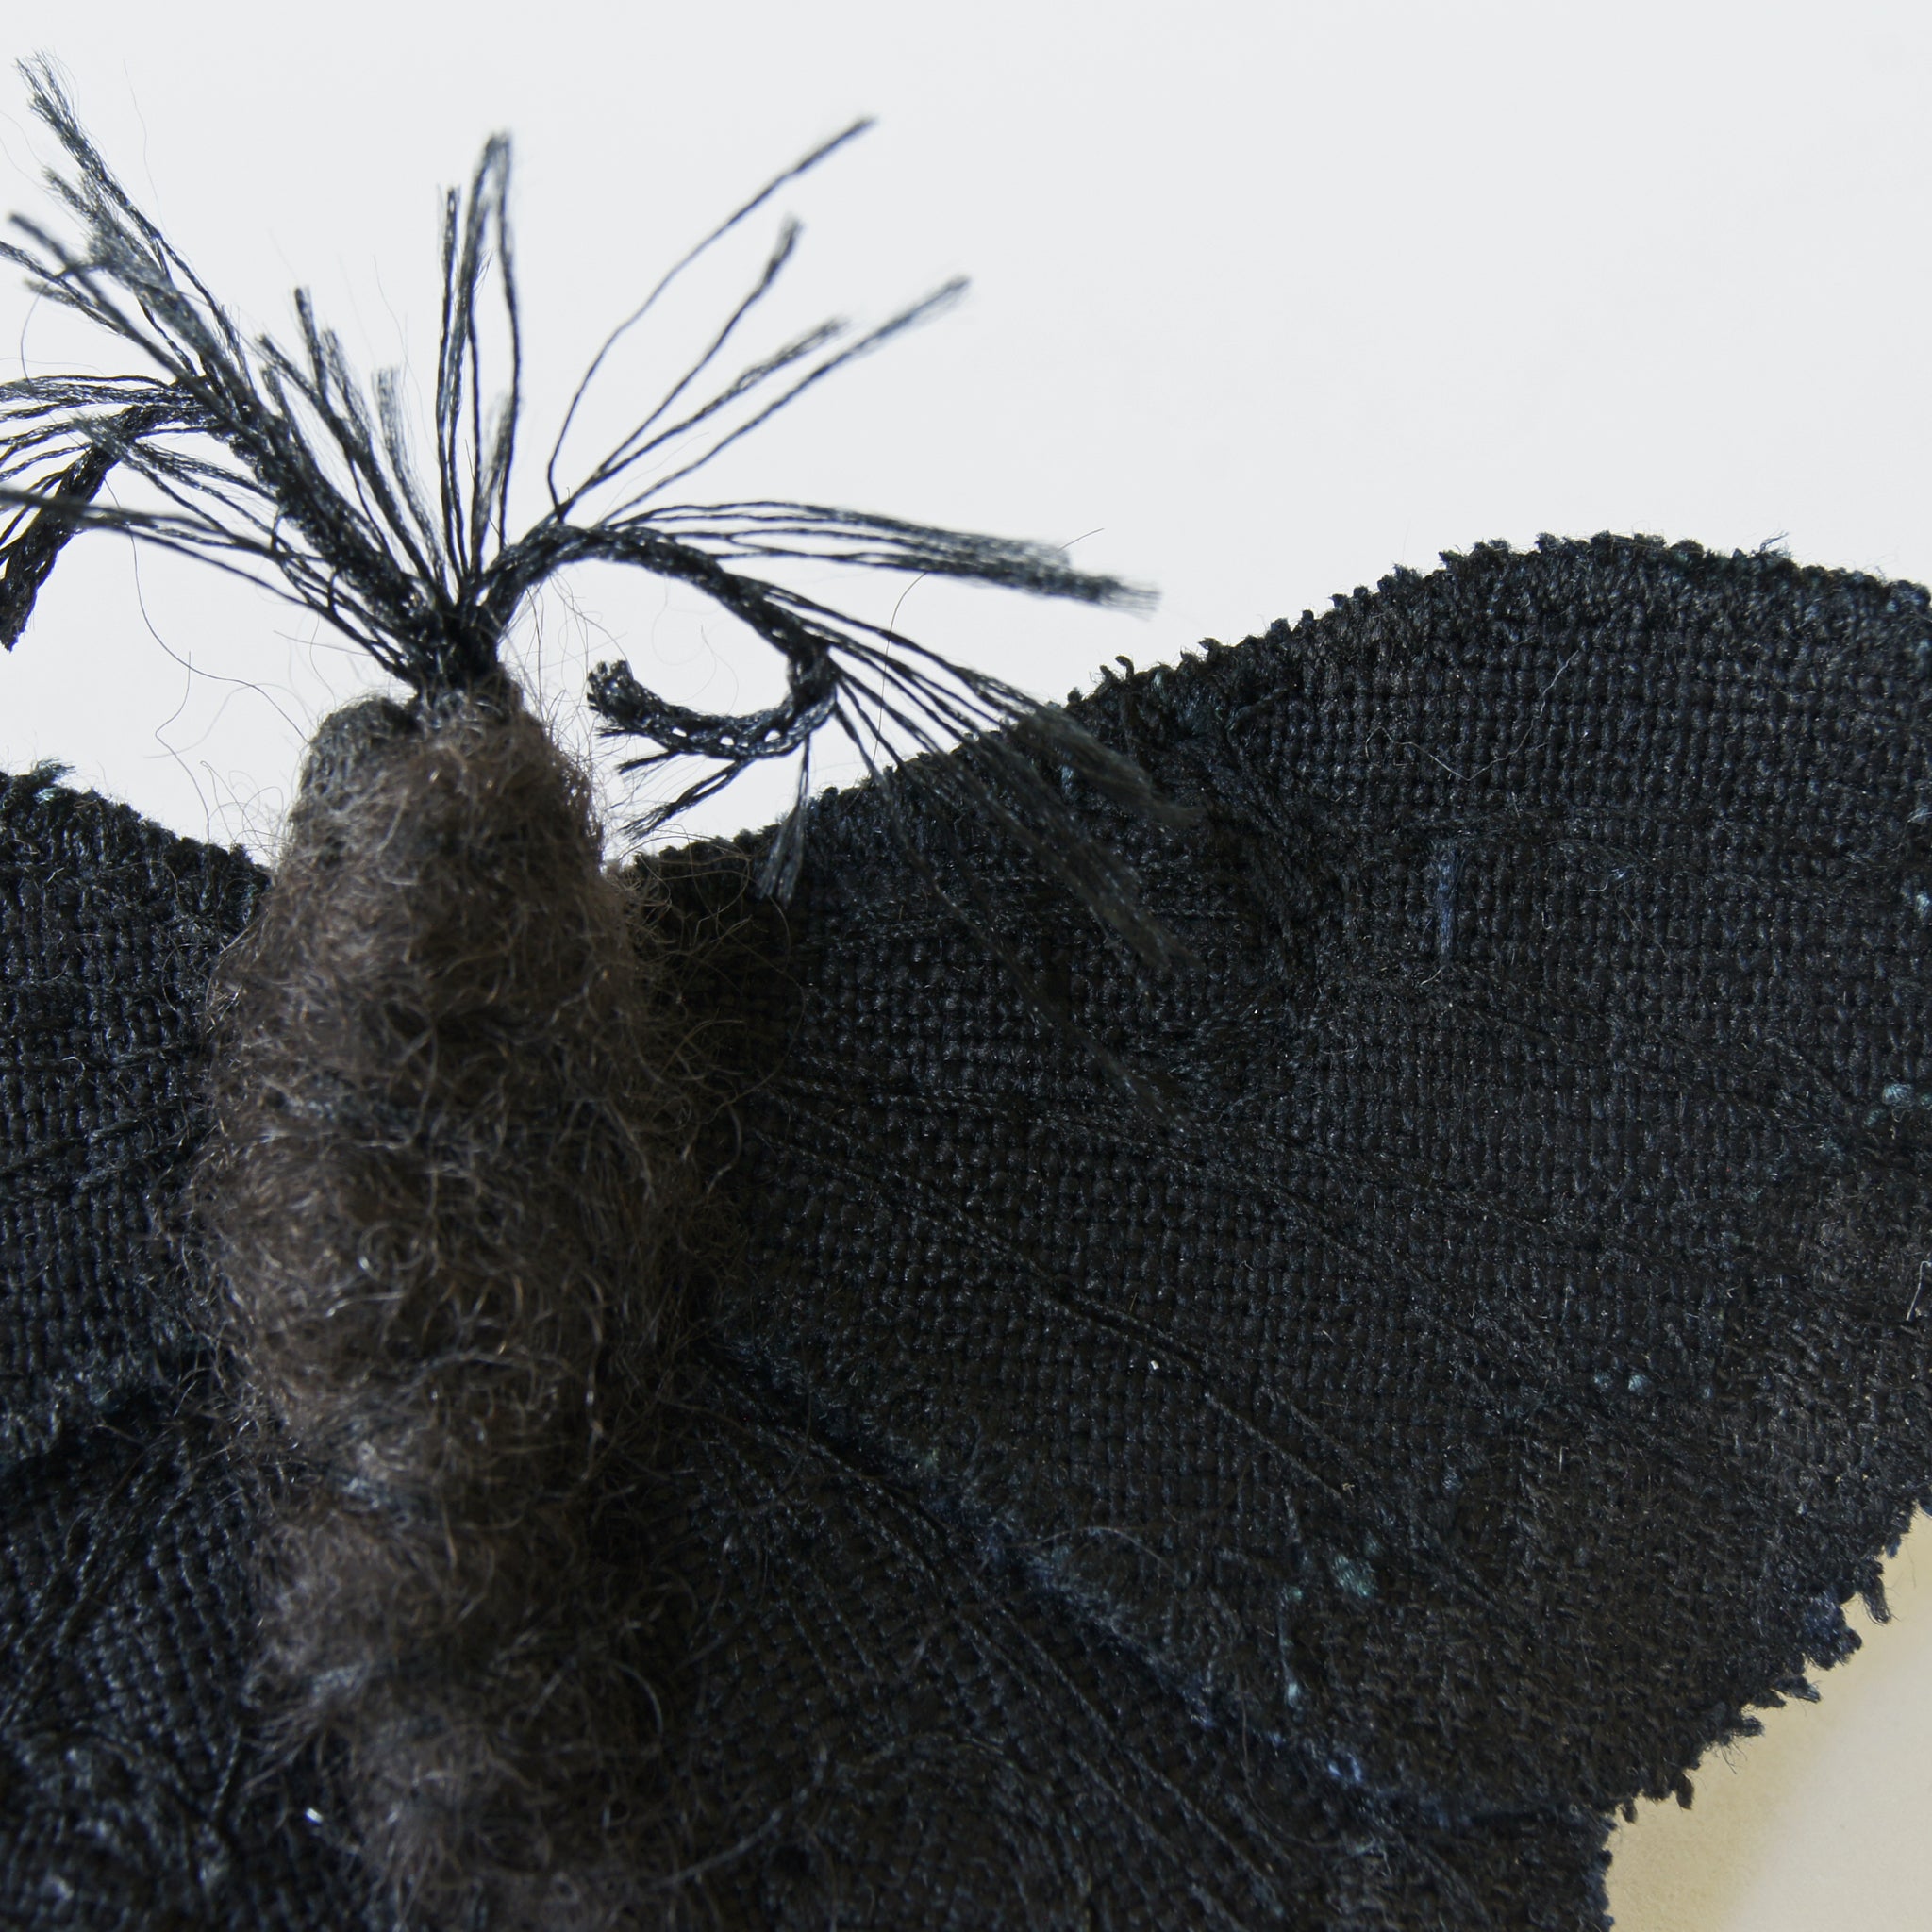 Avenie Luna Moth Cream And Black Small Acrylic Tray - Deny Designs